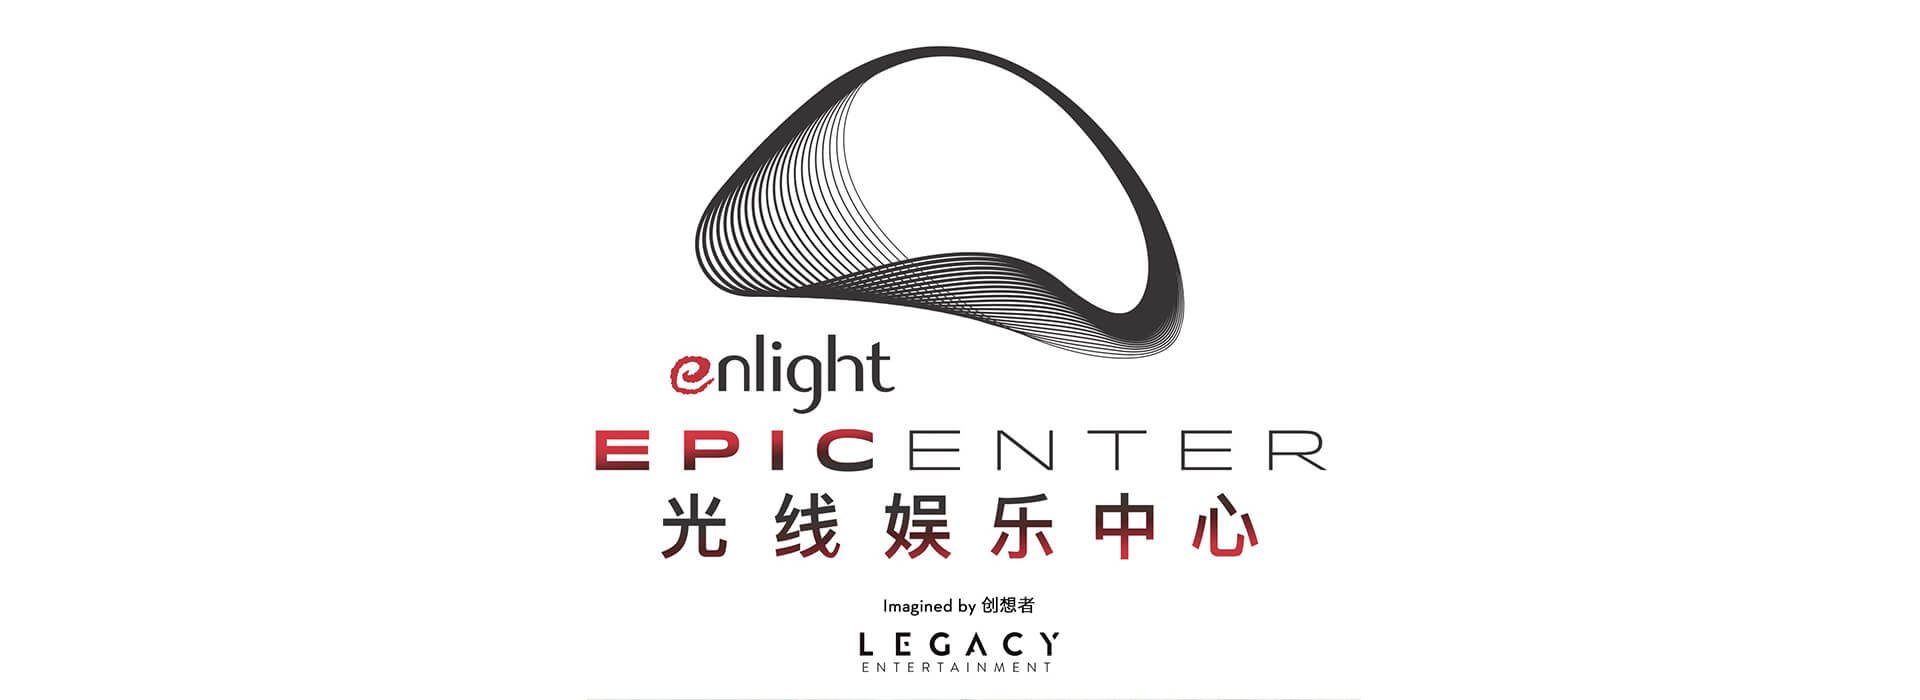 Enlight_Epicenter05